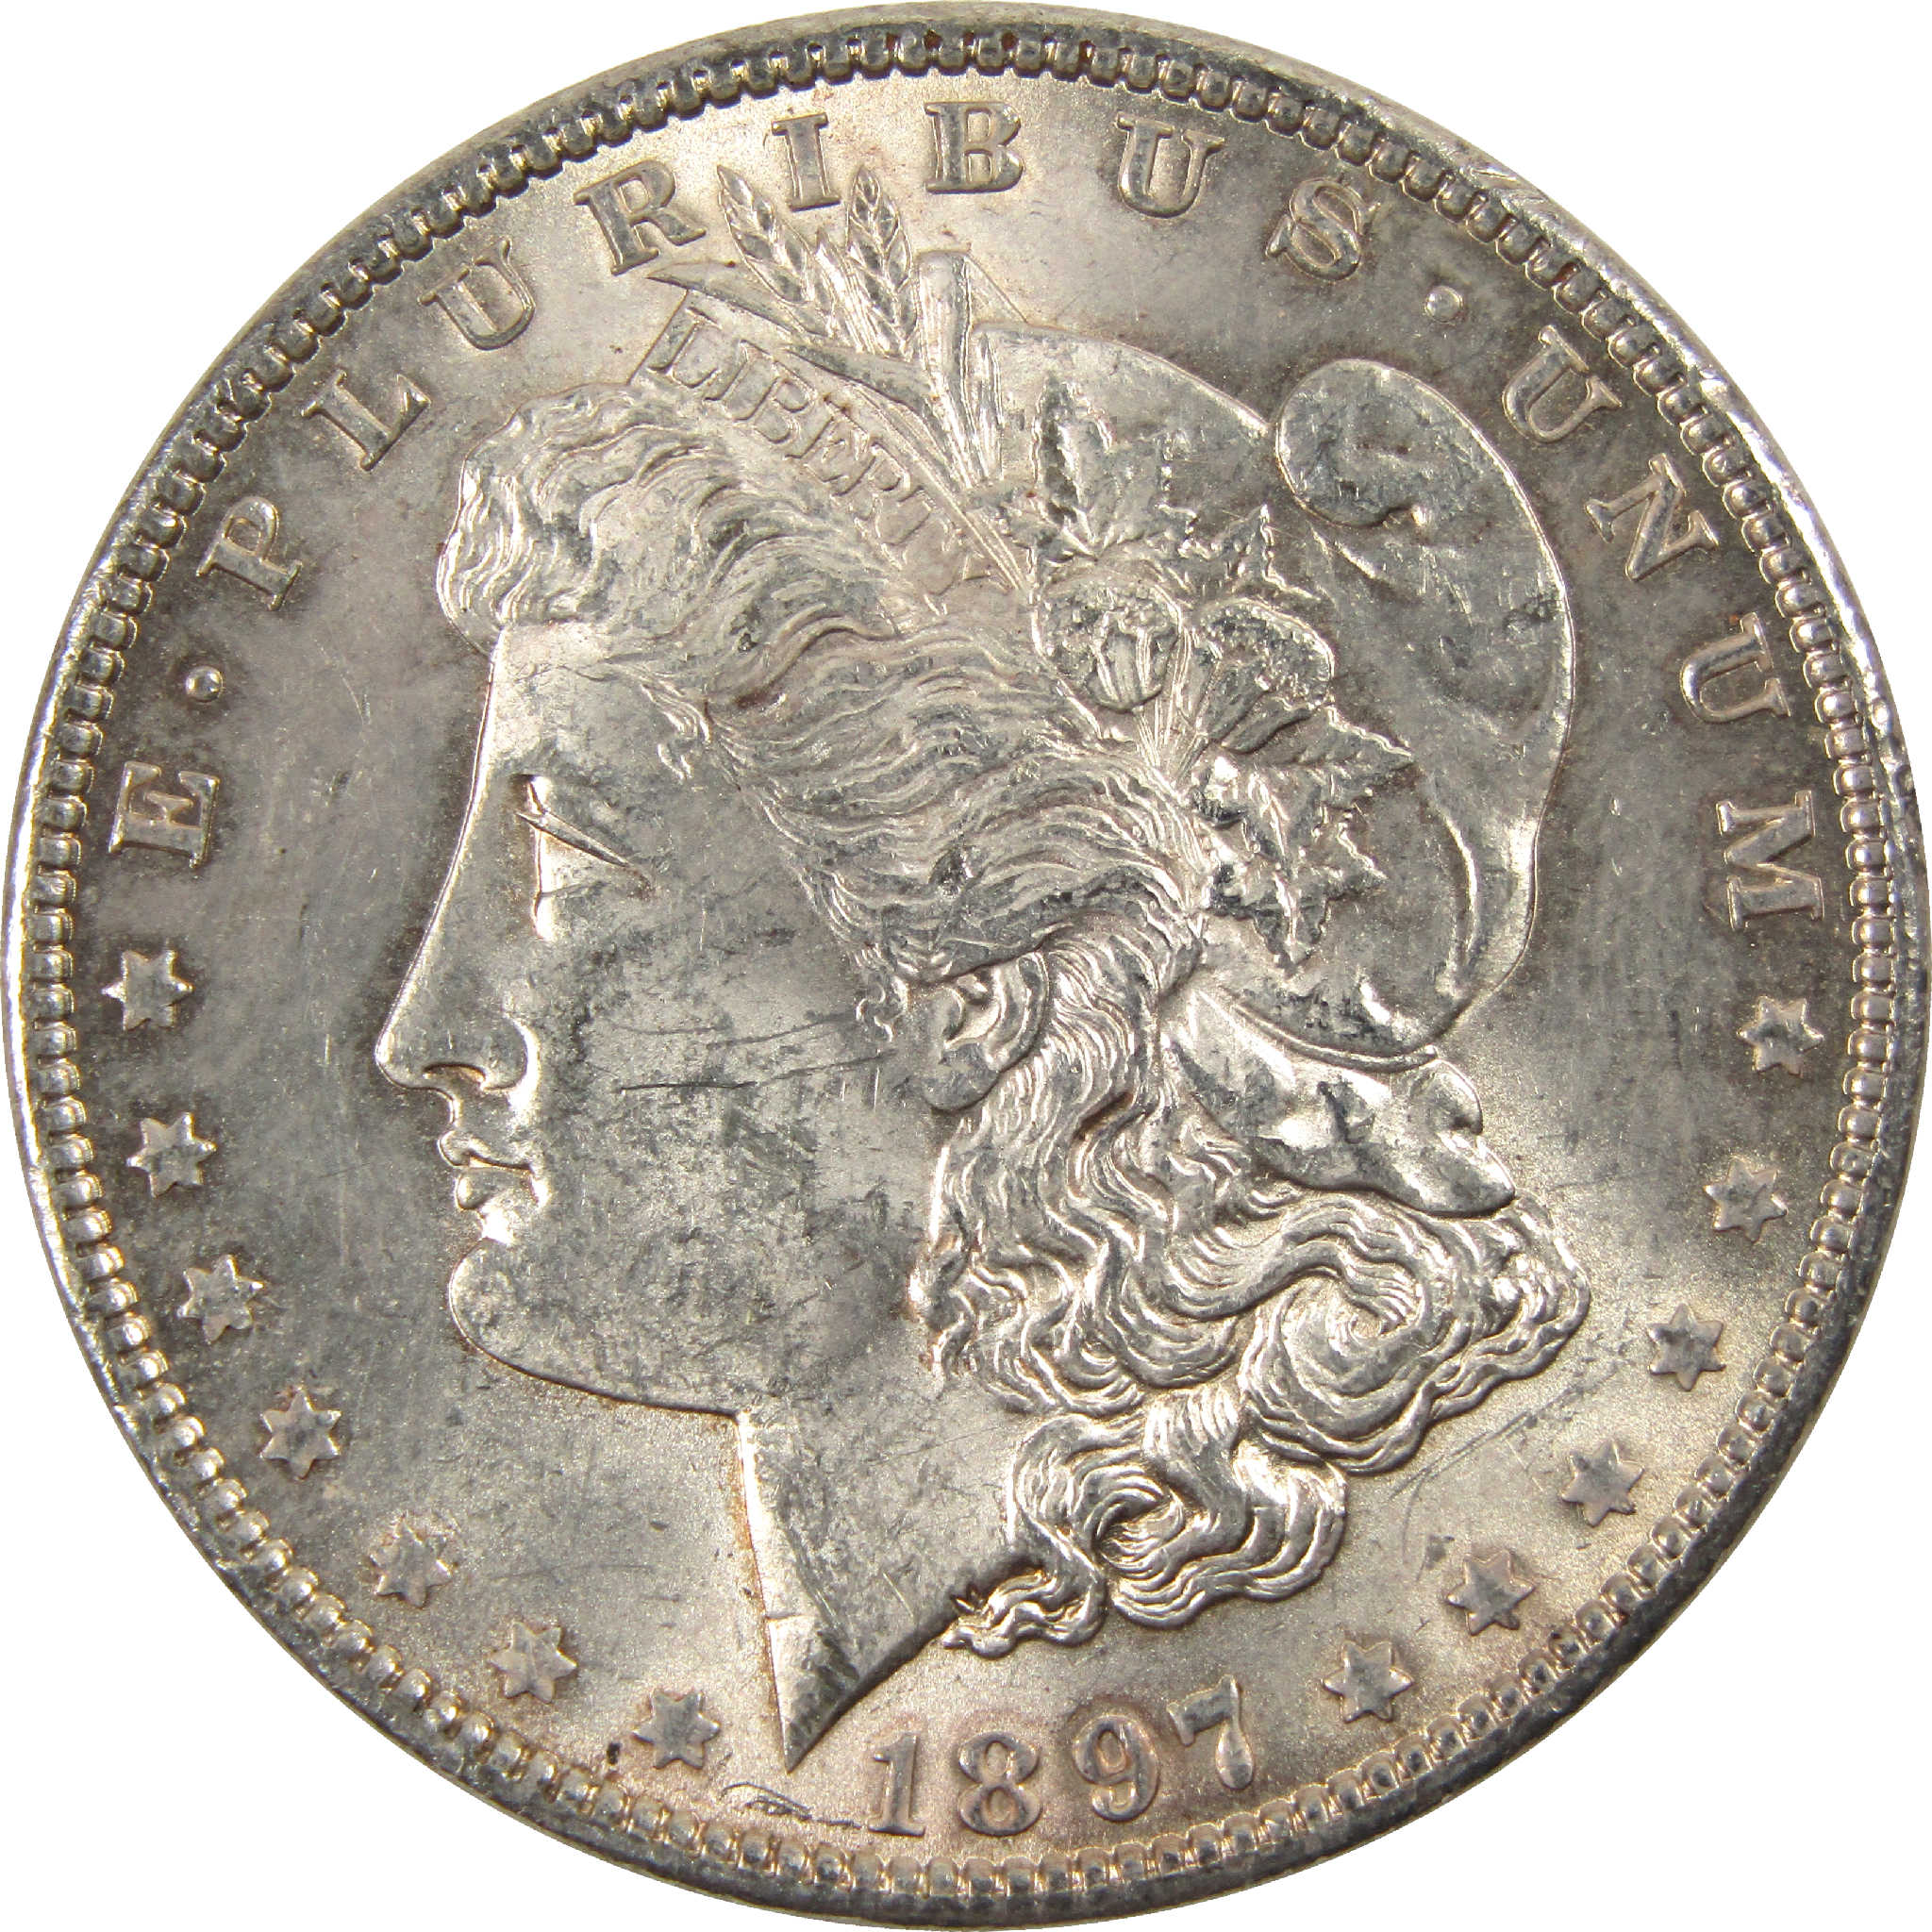 1897 Morgan Dollar CH AU Choice About Uncirculated Silver $1 Coin - Morgan coin - Morgan silver dollar - Morgan silver dollar for sale - Profile Coins &amp; Collectibles